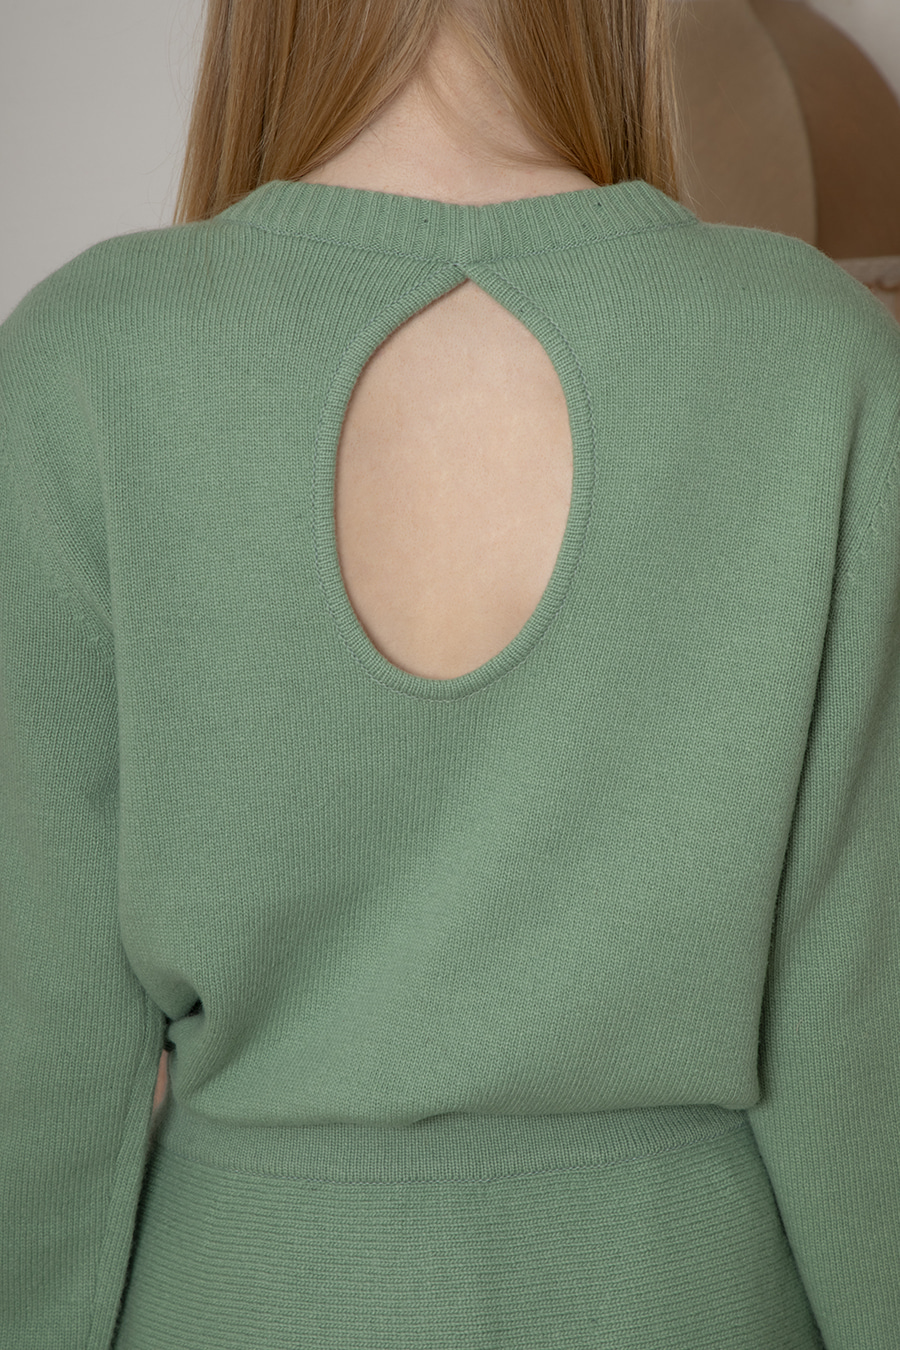 Cashmere blended back hole knit top - Mint